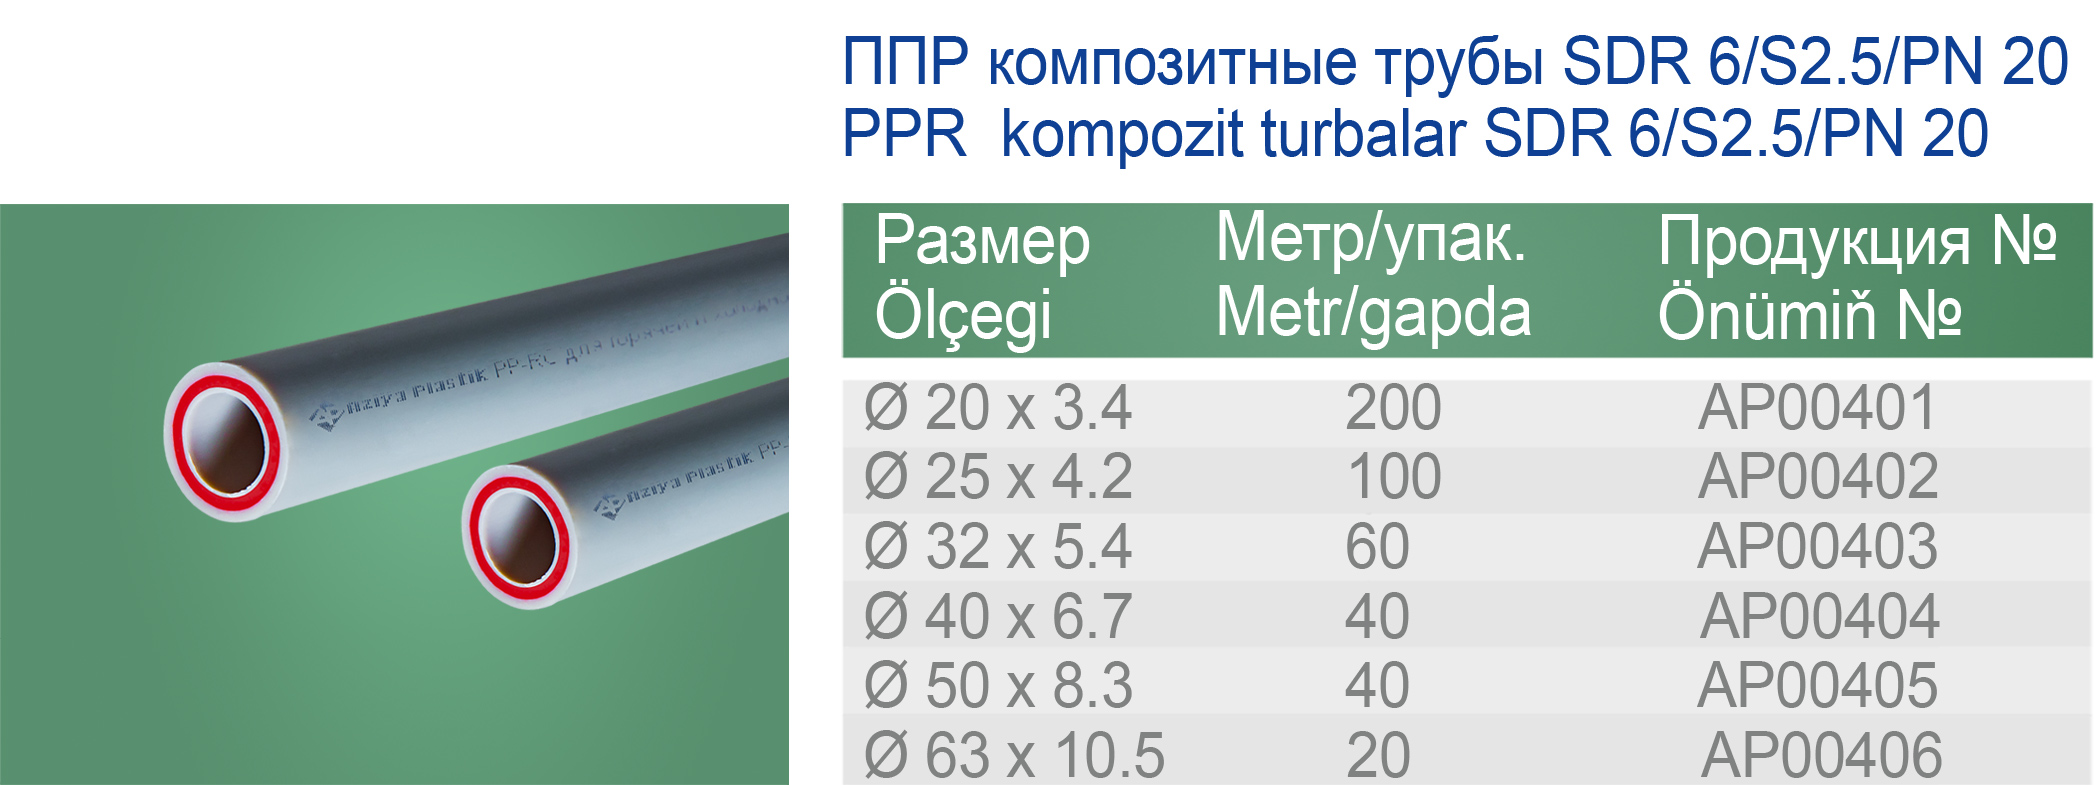 Полипропиленовая композитная труба АП PP-R pipe Ø25x4.2 SDR6/S2.5/PN20 .